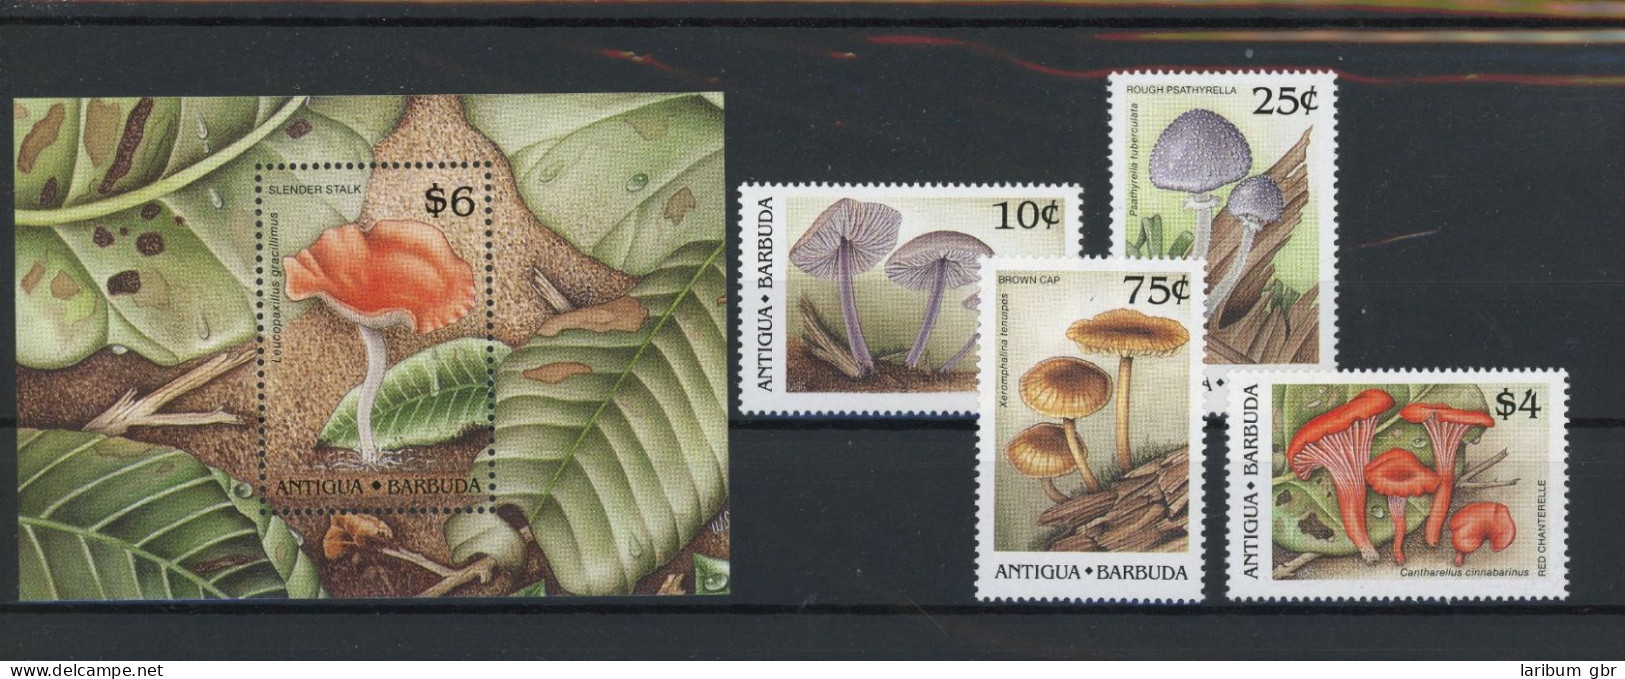 Antigua Barbuda 1258-1259, 62, 65, Block 162 Postfrisch Pilze #JO675 - Antigua And Barbuda (1981-...)